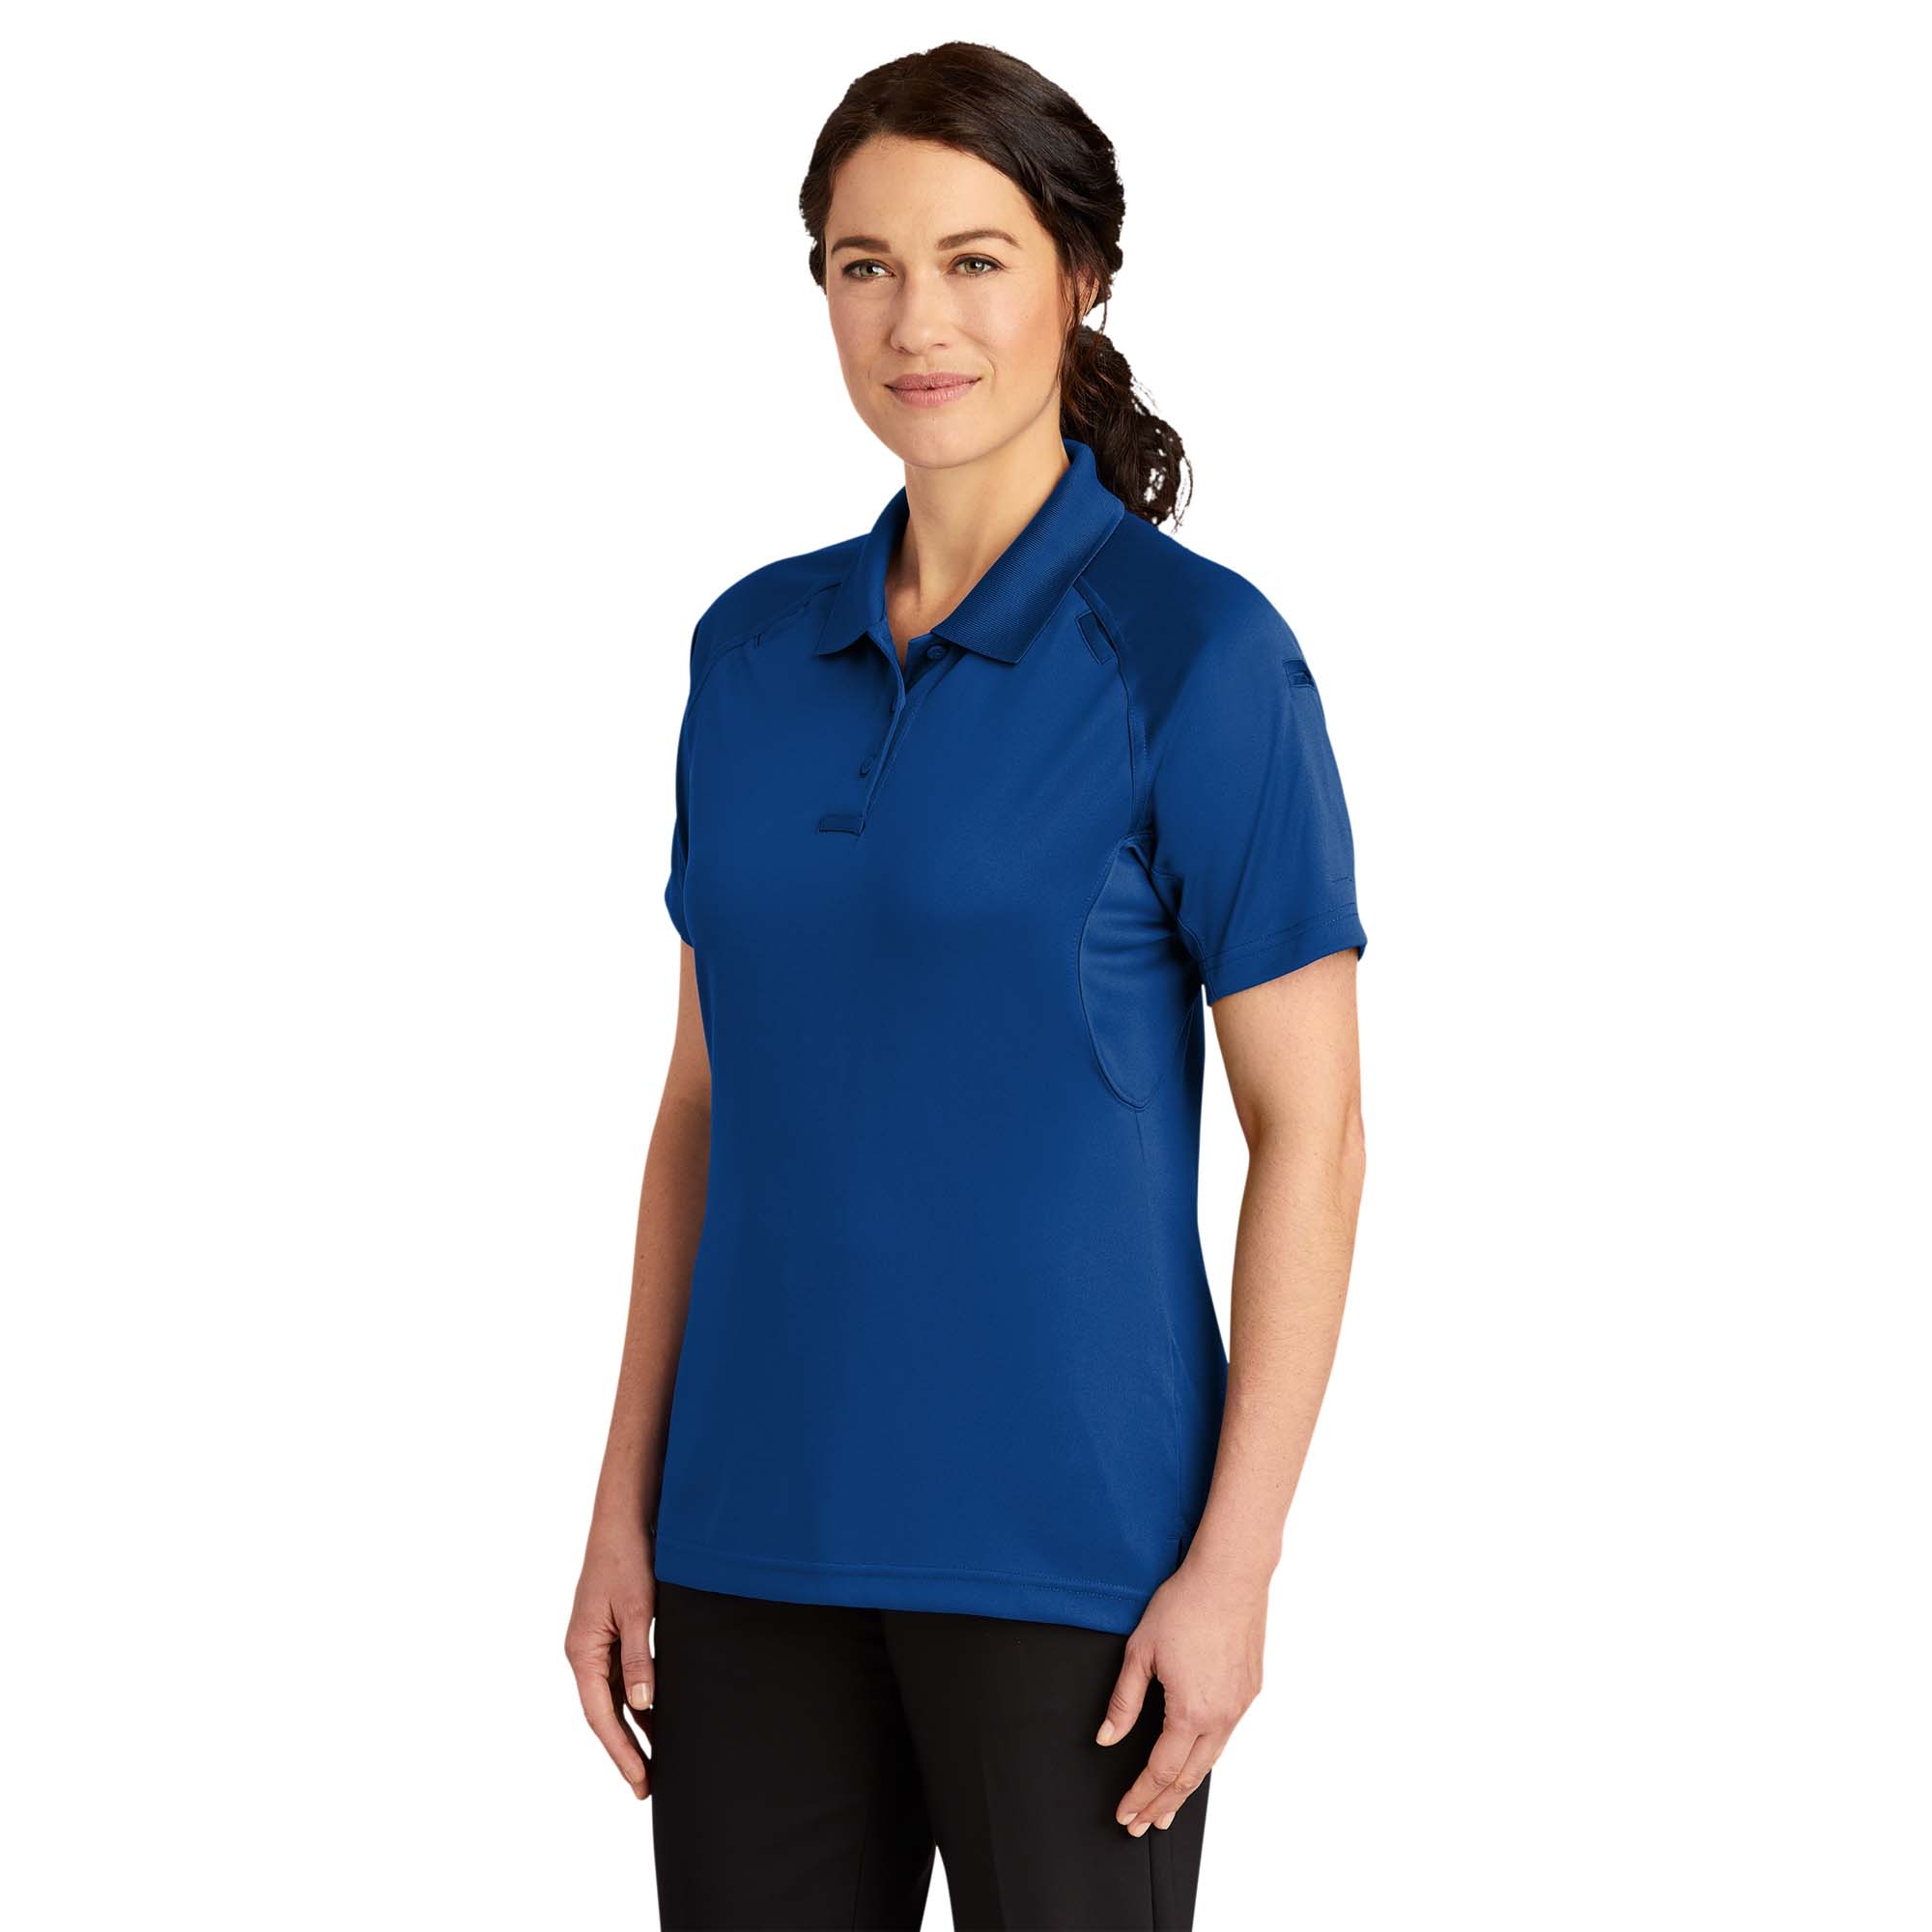 SanMar Wholesale Ladies Snag-Proof Polo Shirt - Royal Blue CS413, Case of 36, Options, Royal Blue, Case of (36) Pieces